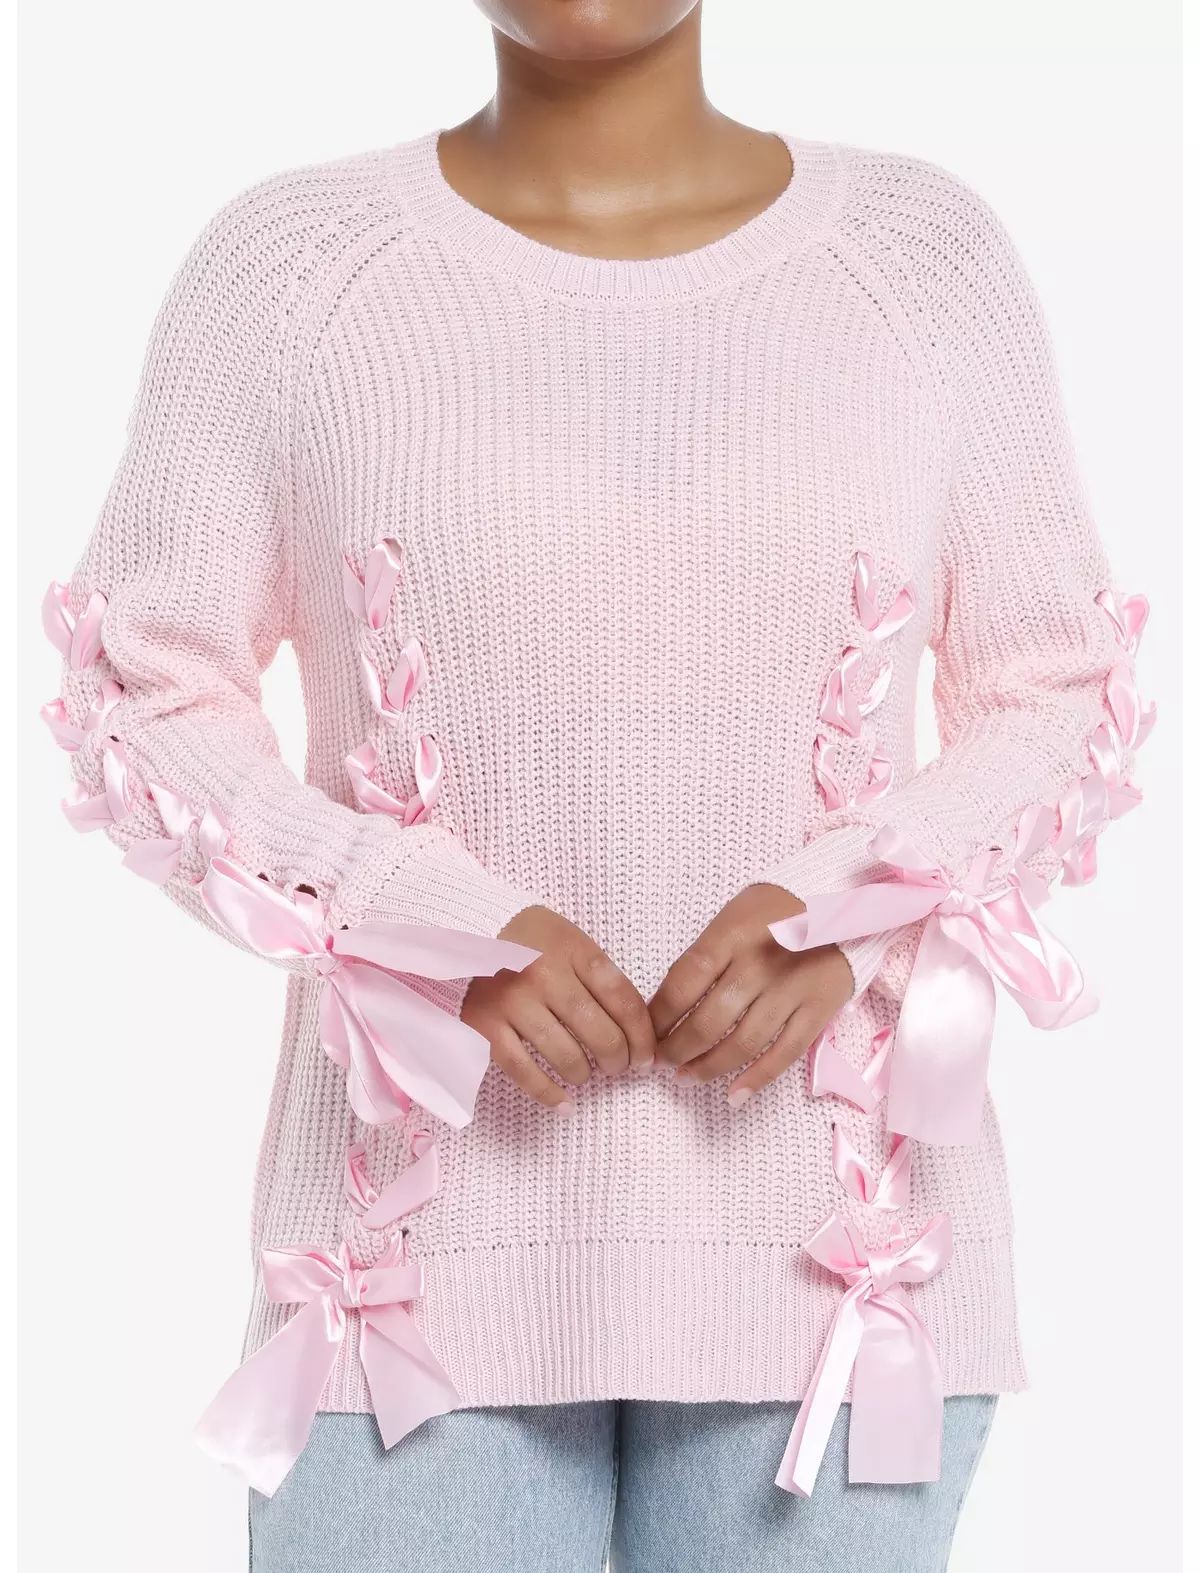 Sweet Society Pink Ribbon Girls Knit Sweater | Hot Topic